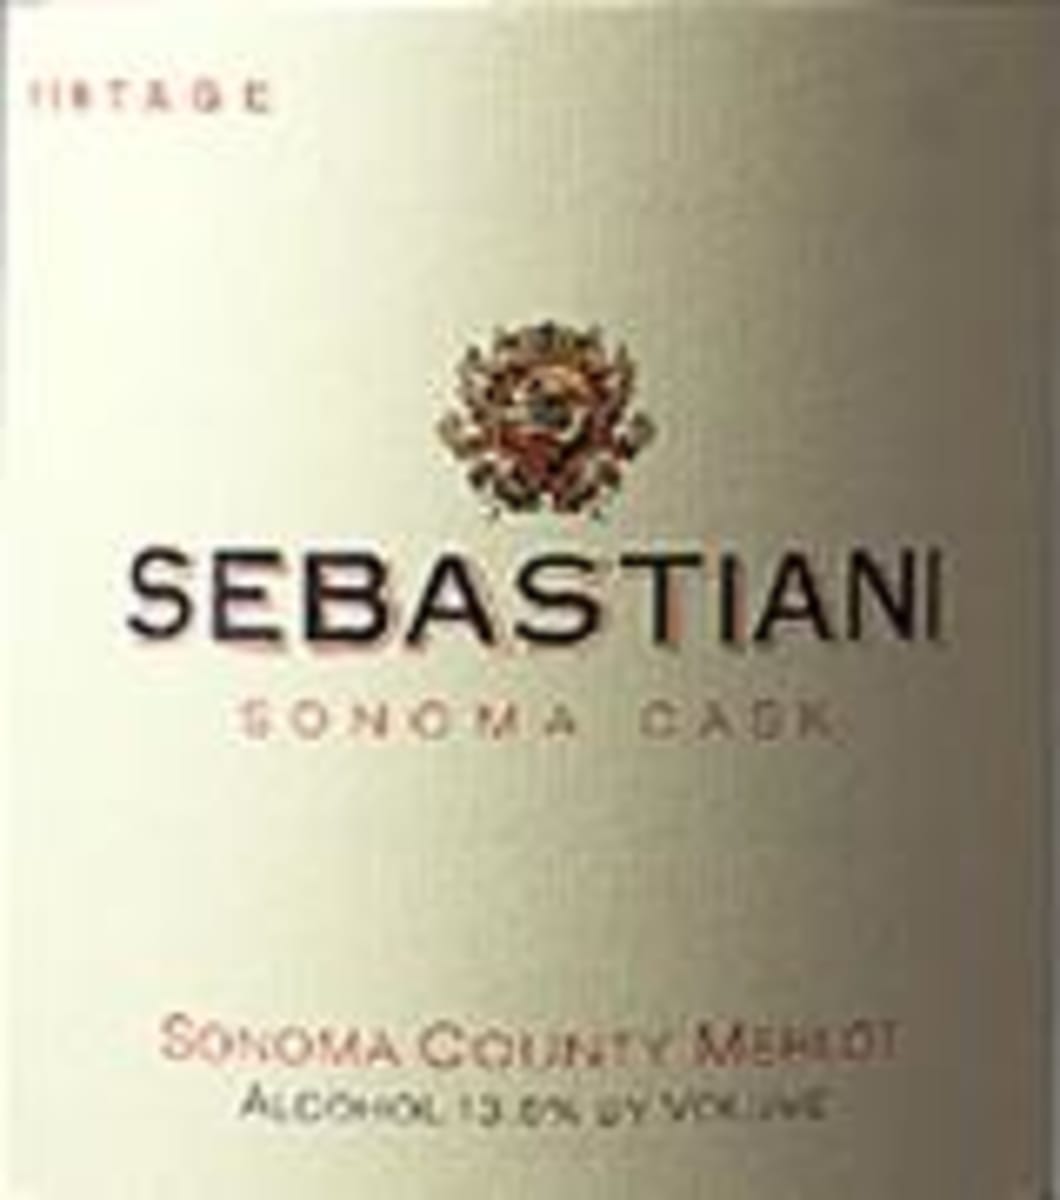 Sebastiani Sonoma Cask Merlot 1996 Front Label